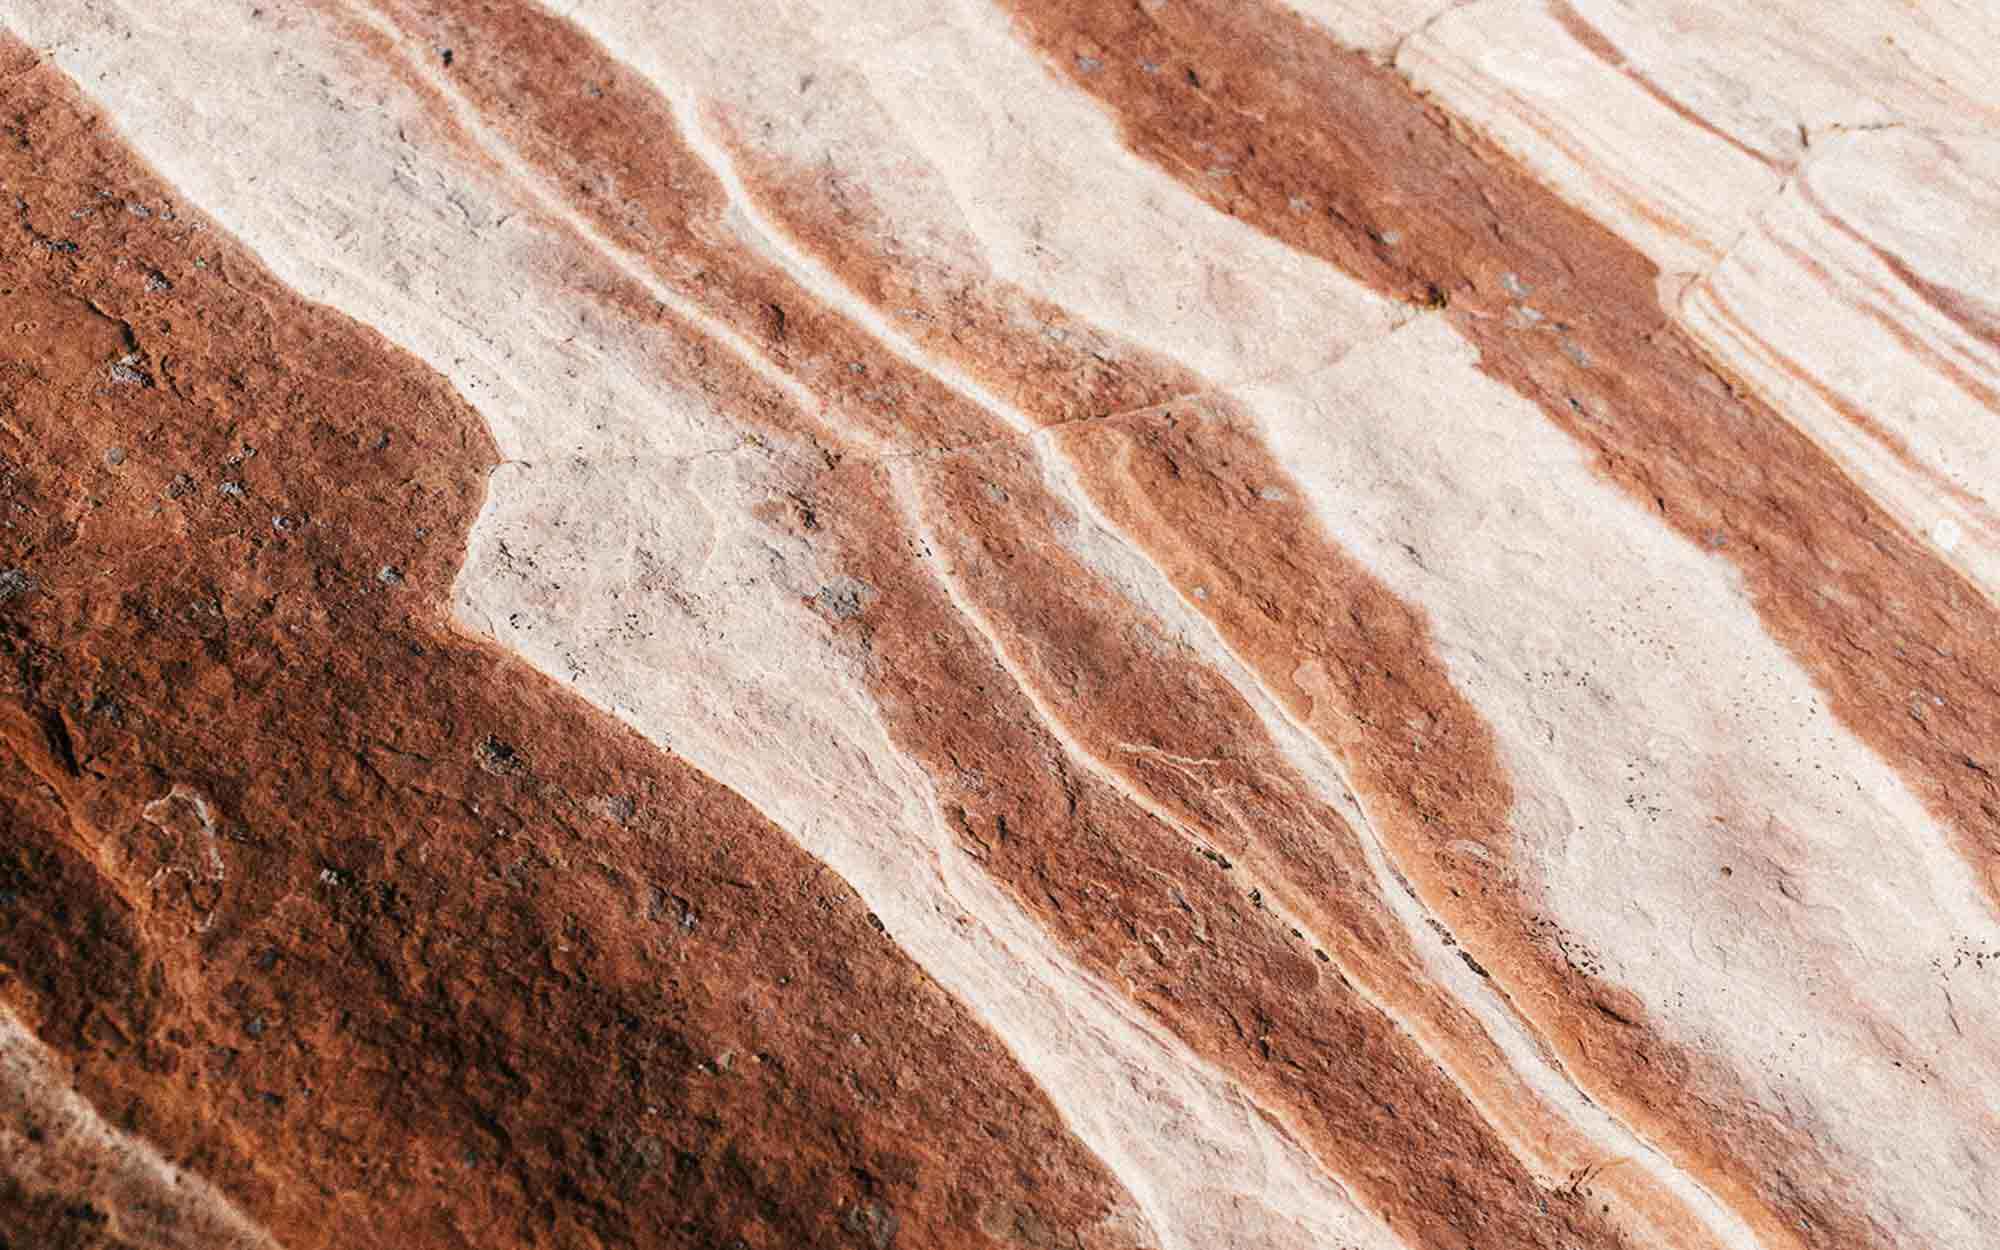 CARA MIA: Stone texture close-up